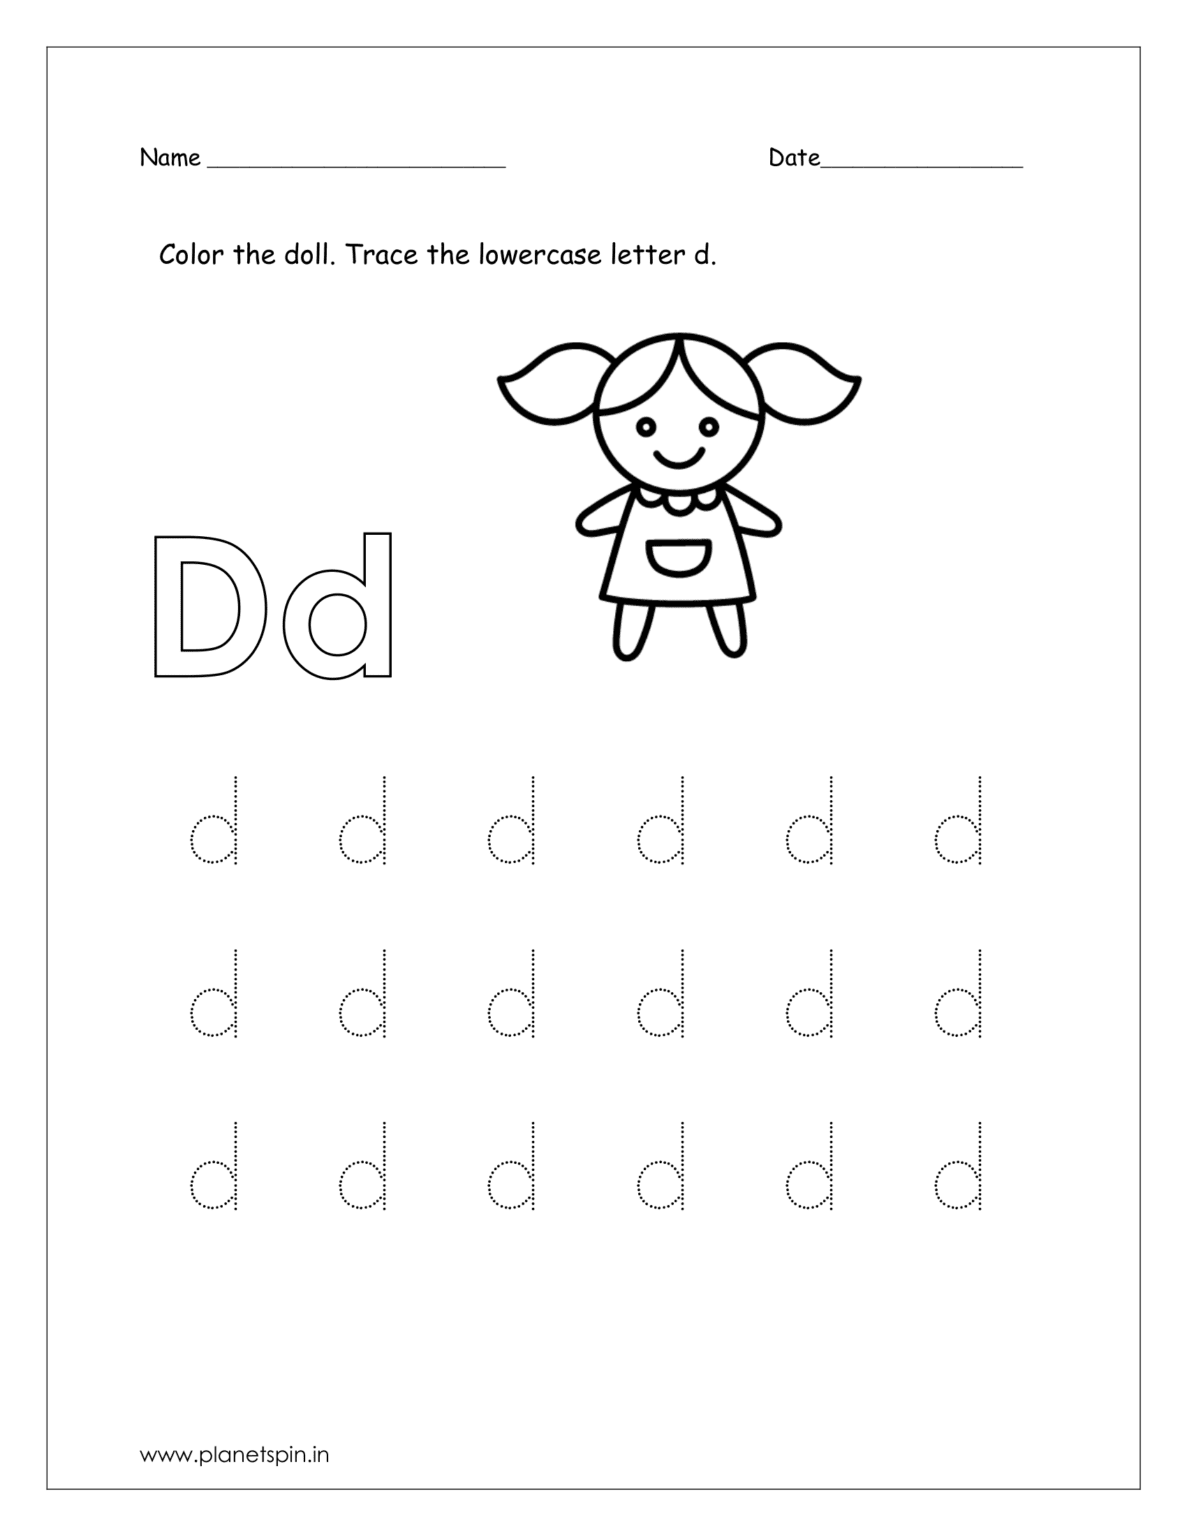 Preschool letter d worksheet for kindergarten | Planetspin.in